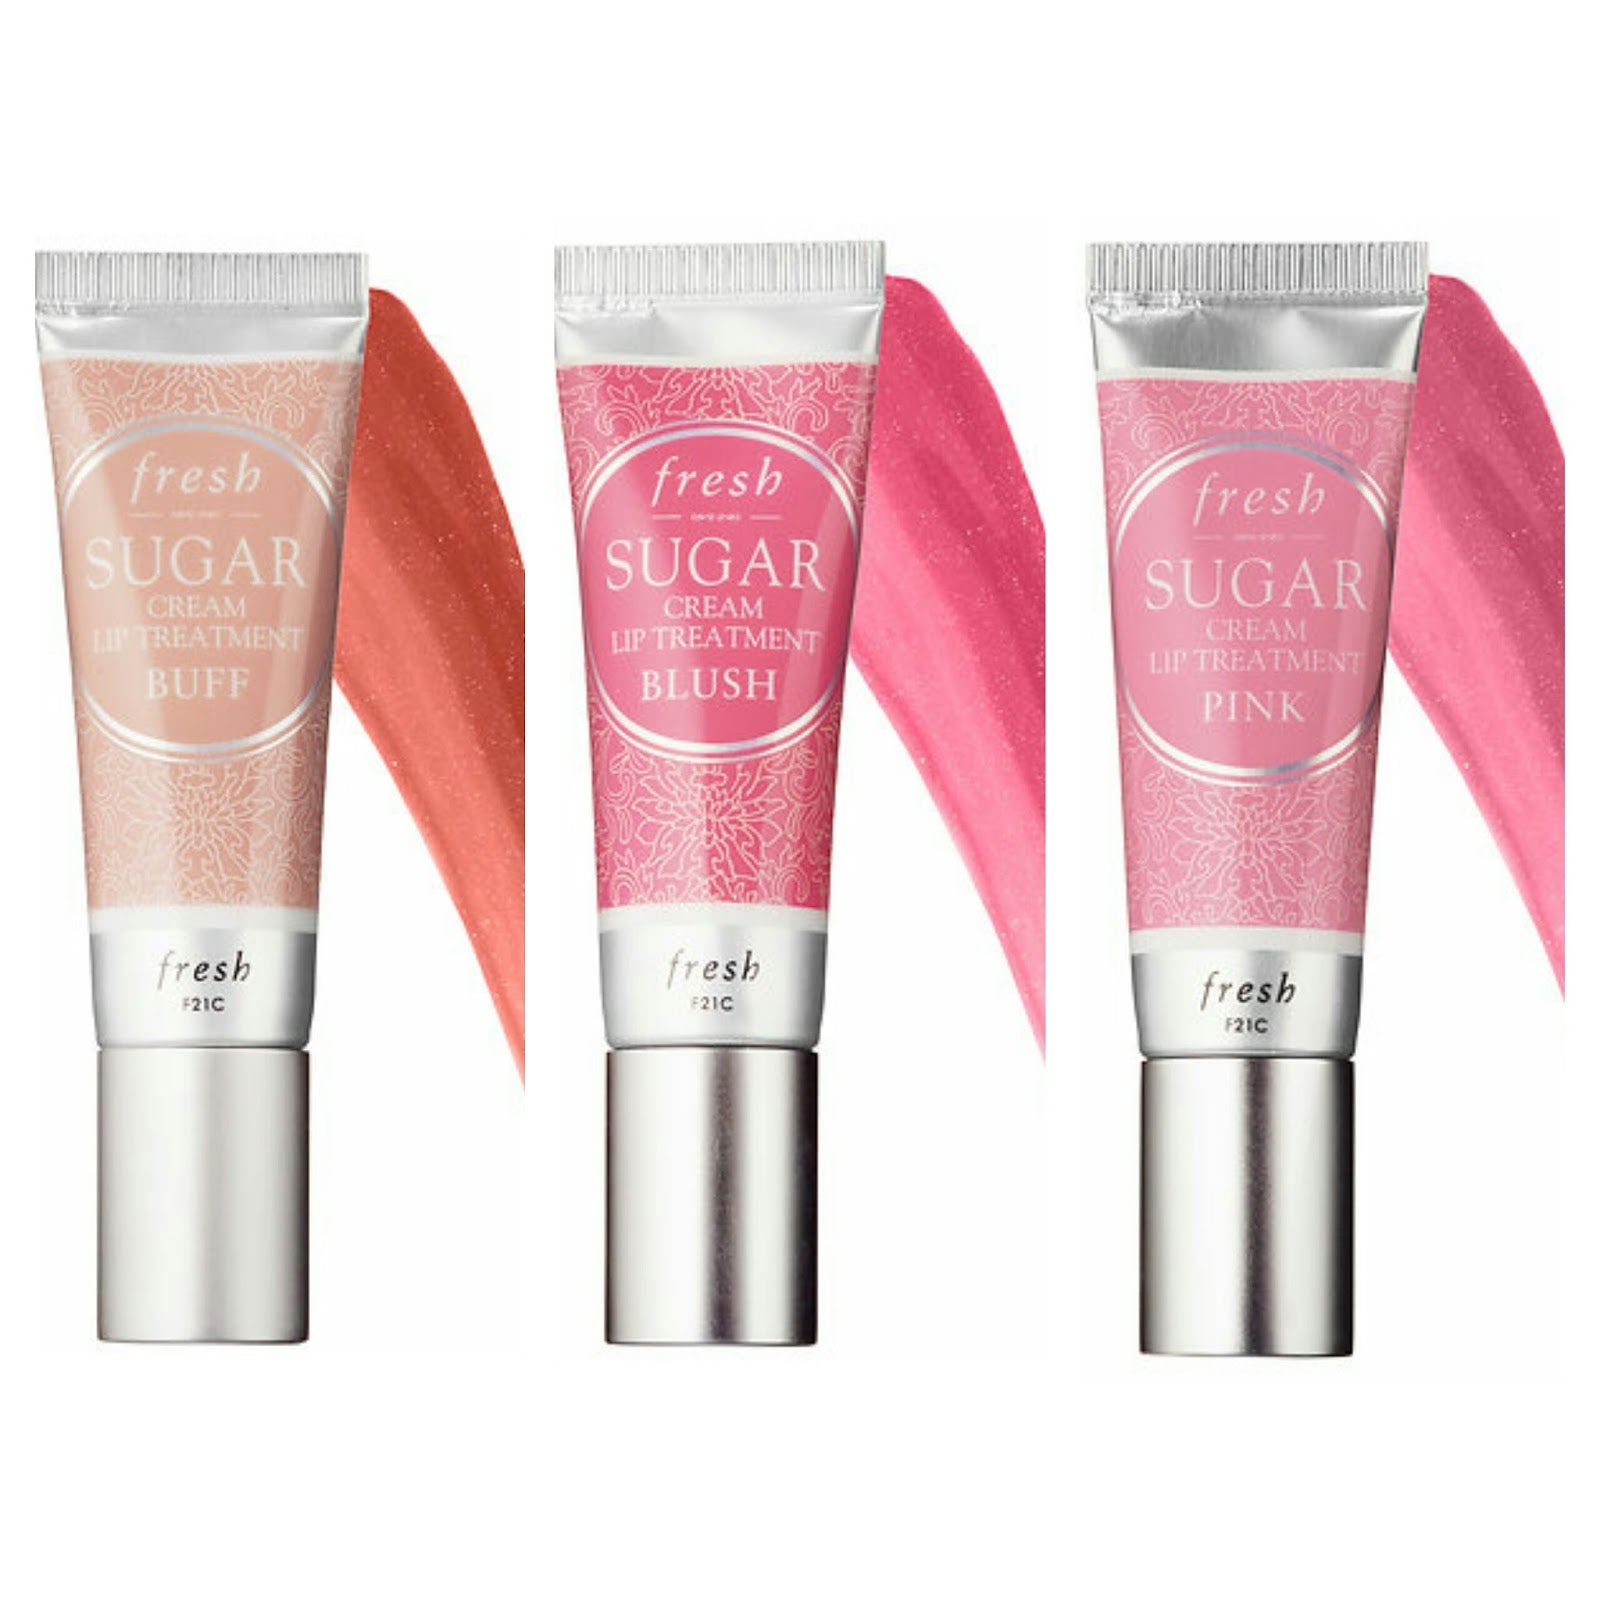 Makeup Review, Shades, Colors: NEW Fresh Sugar Cream Lip Treatments, Fall 2016